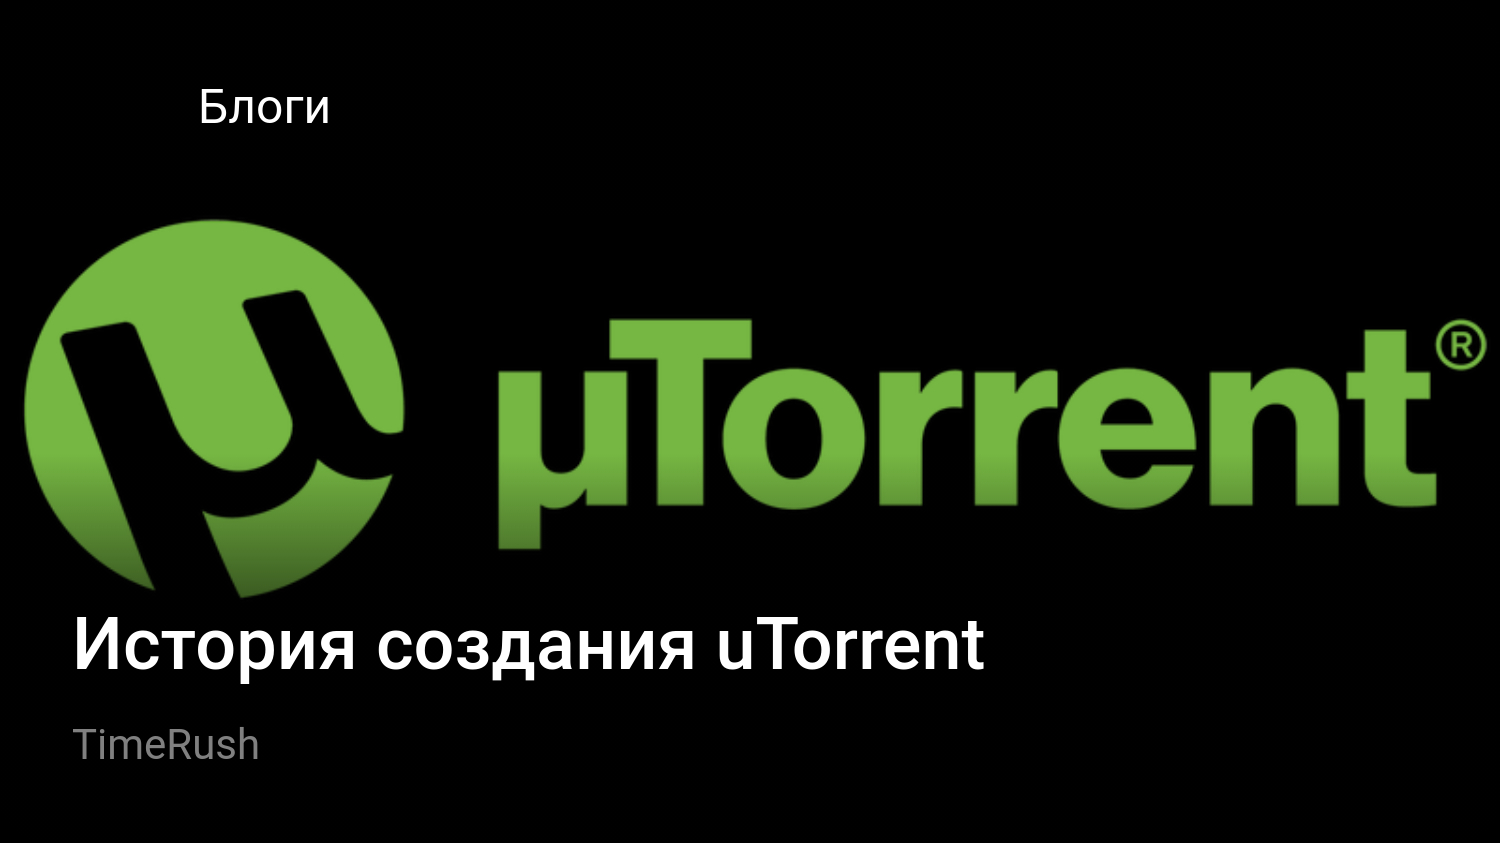 Utorrent com intl. Utorrent. Utorrent логотип. Utorrent картинки. Ярлык utorrent.